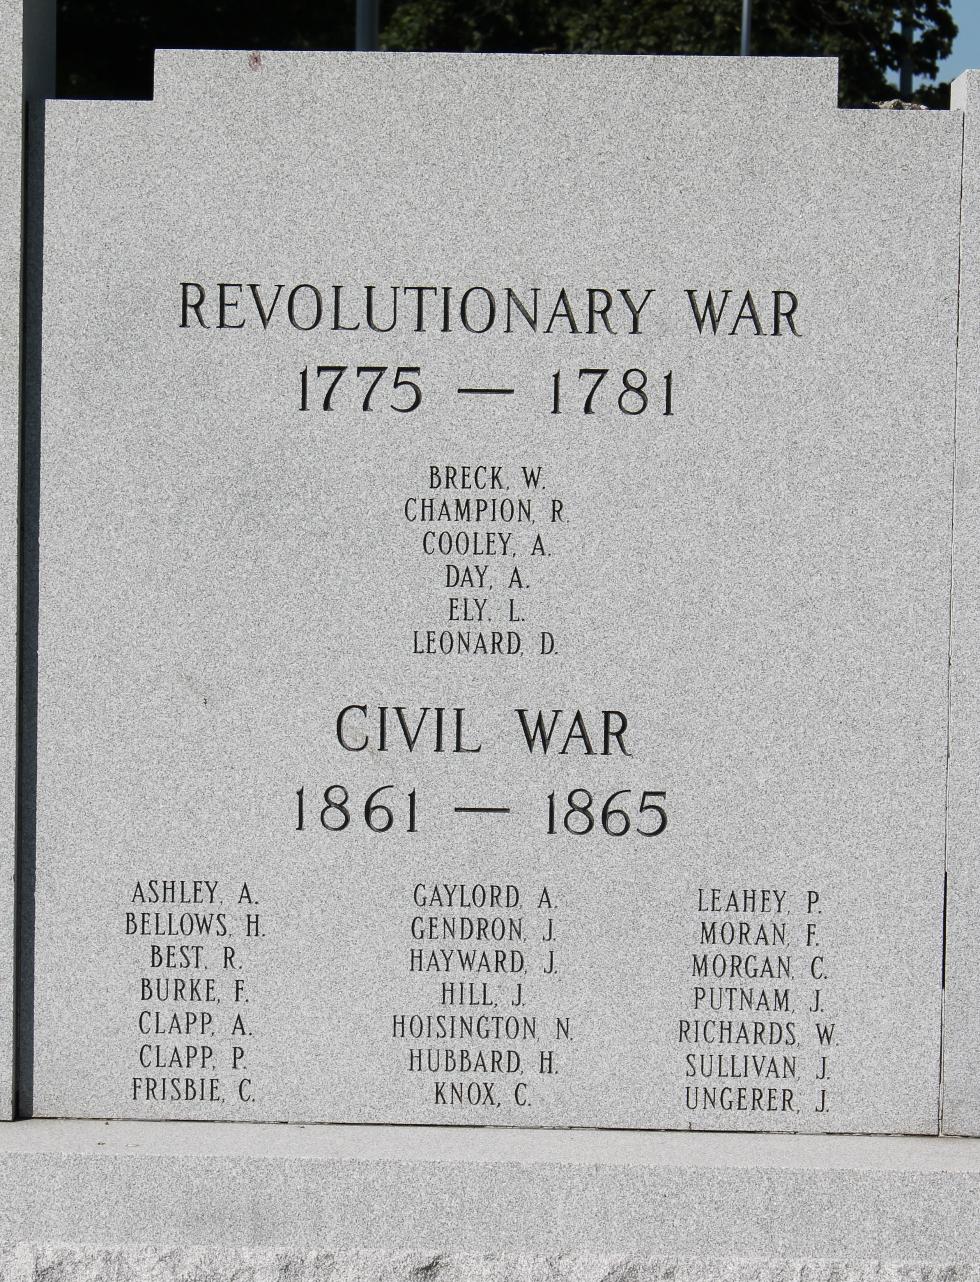 West Springfiels Massachusetts Veterans Memorial